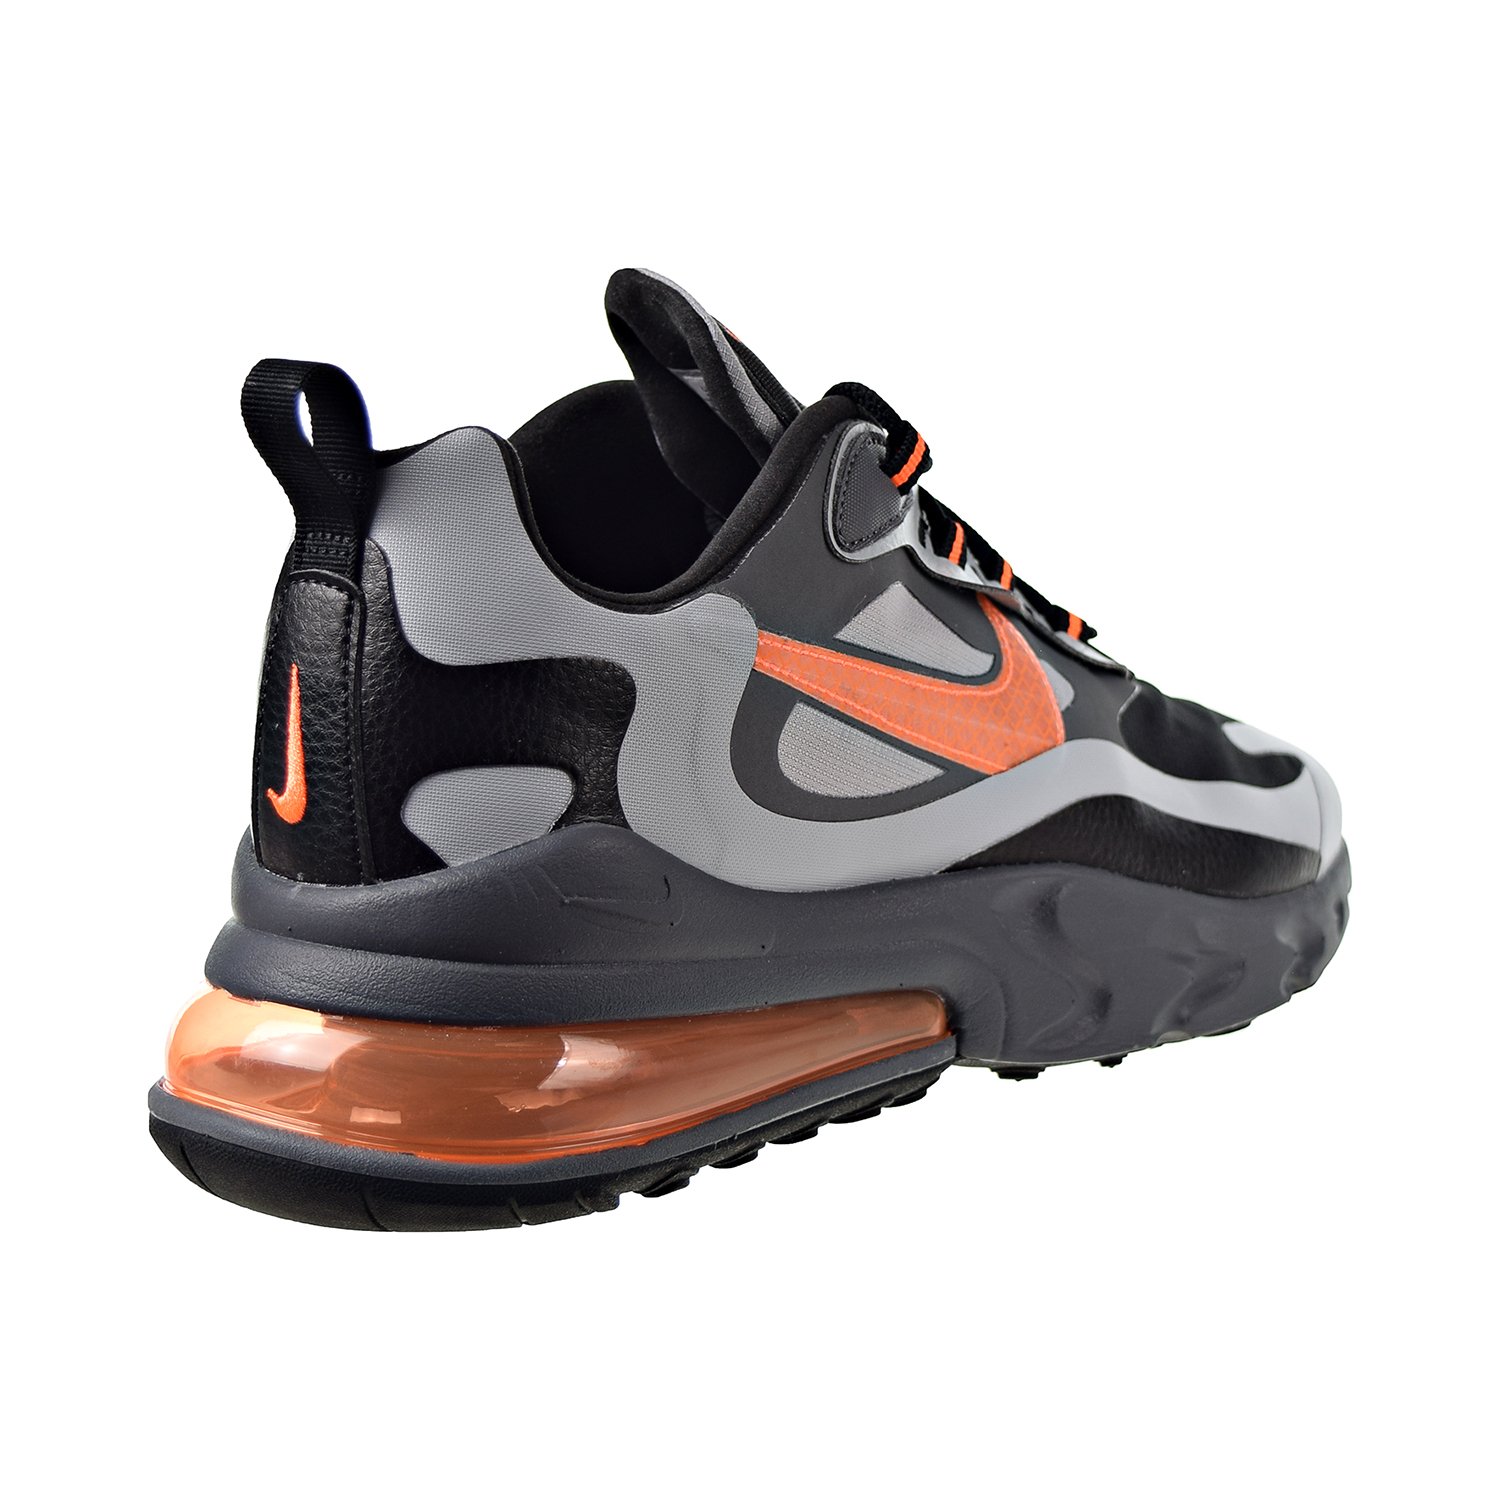 Nike Air Max 270 React Winter Casual Men's Shoes Wolf Grey-Total Orange-Black cd2049-006 - image 3 of 6